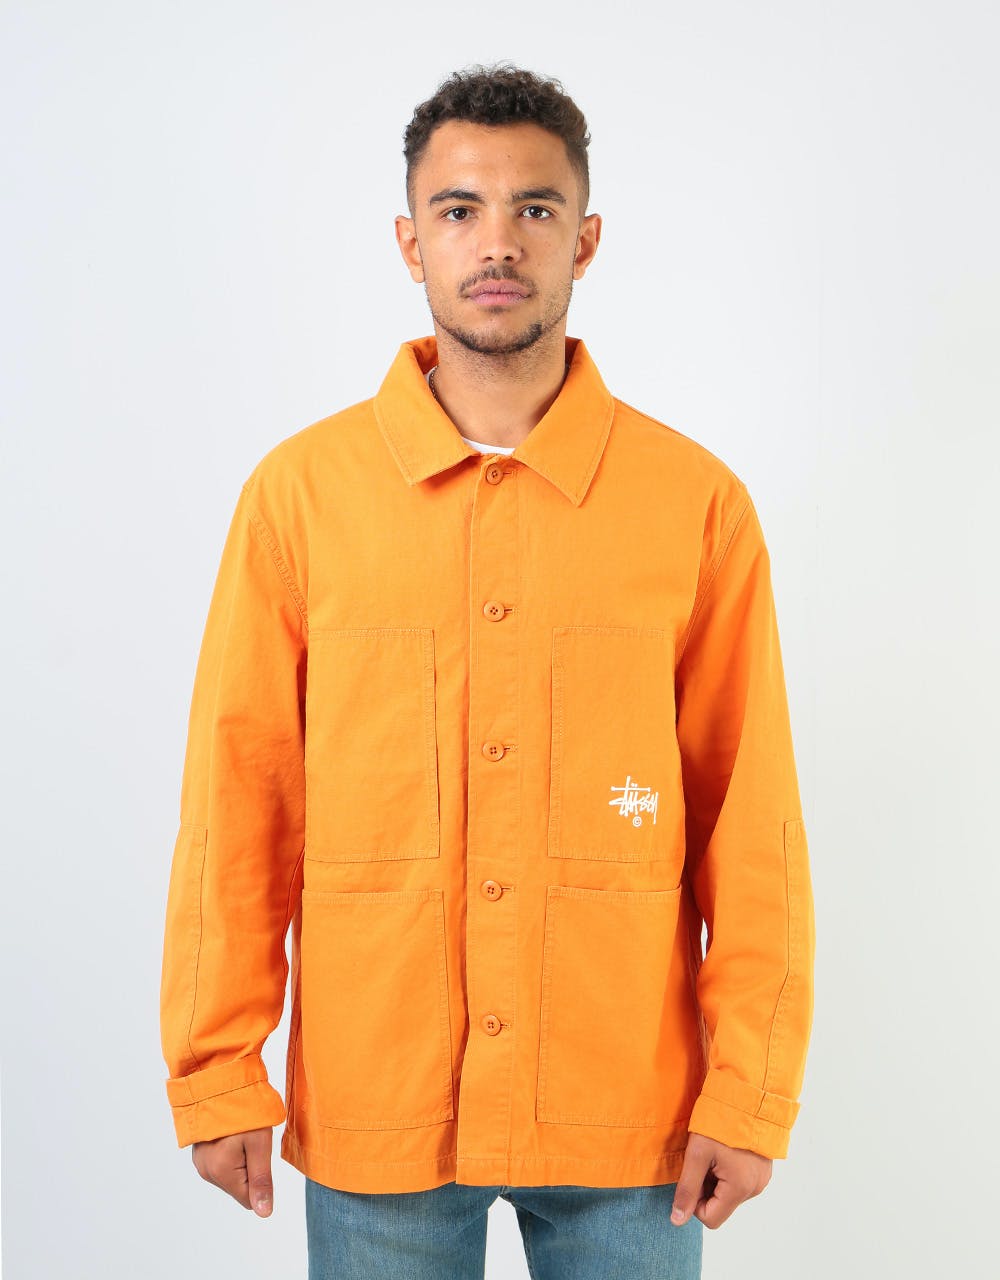 Stüssy Torque Jacket - Orange